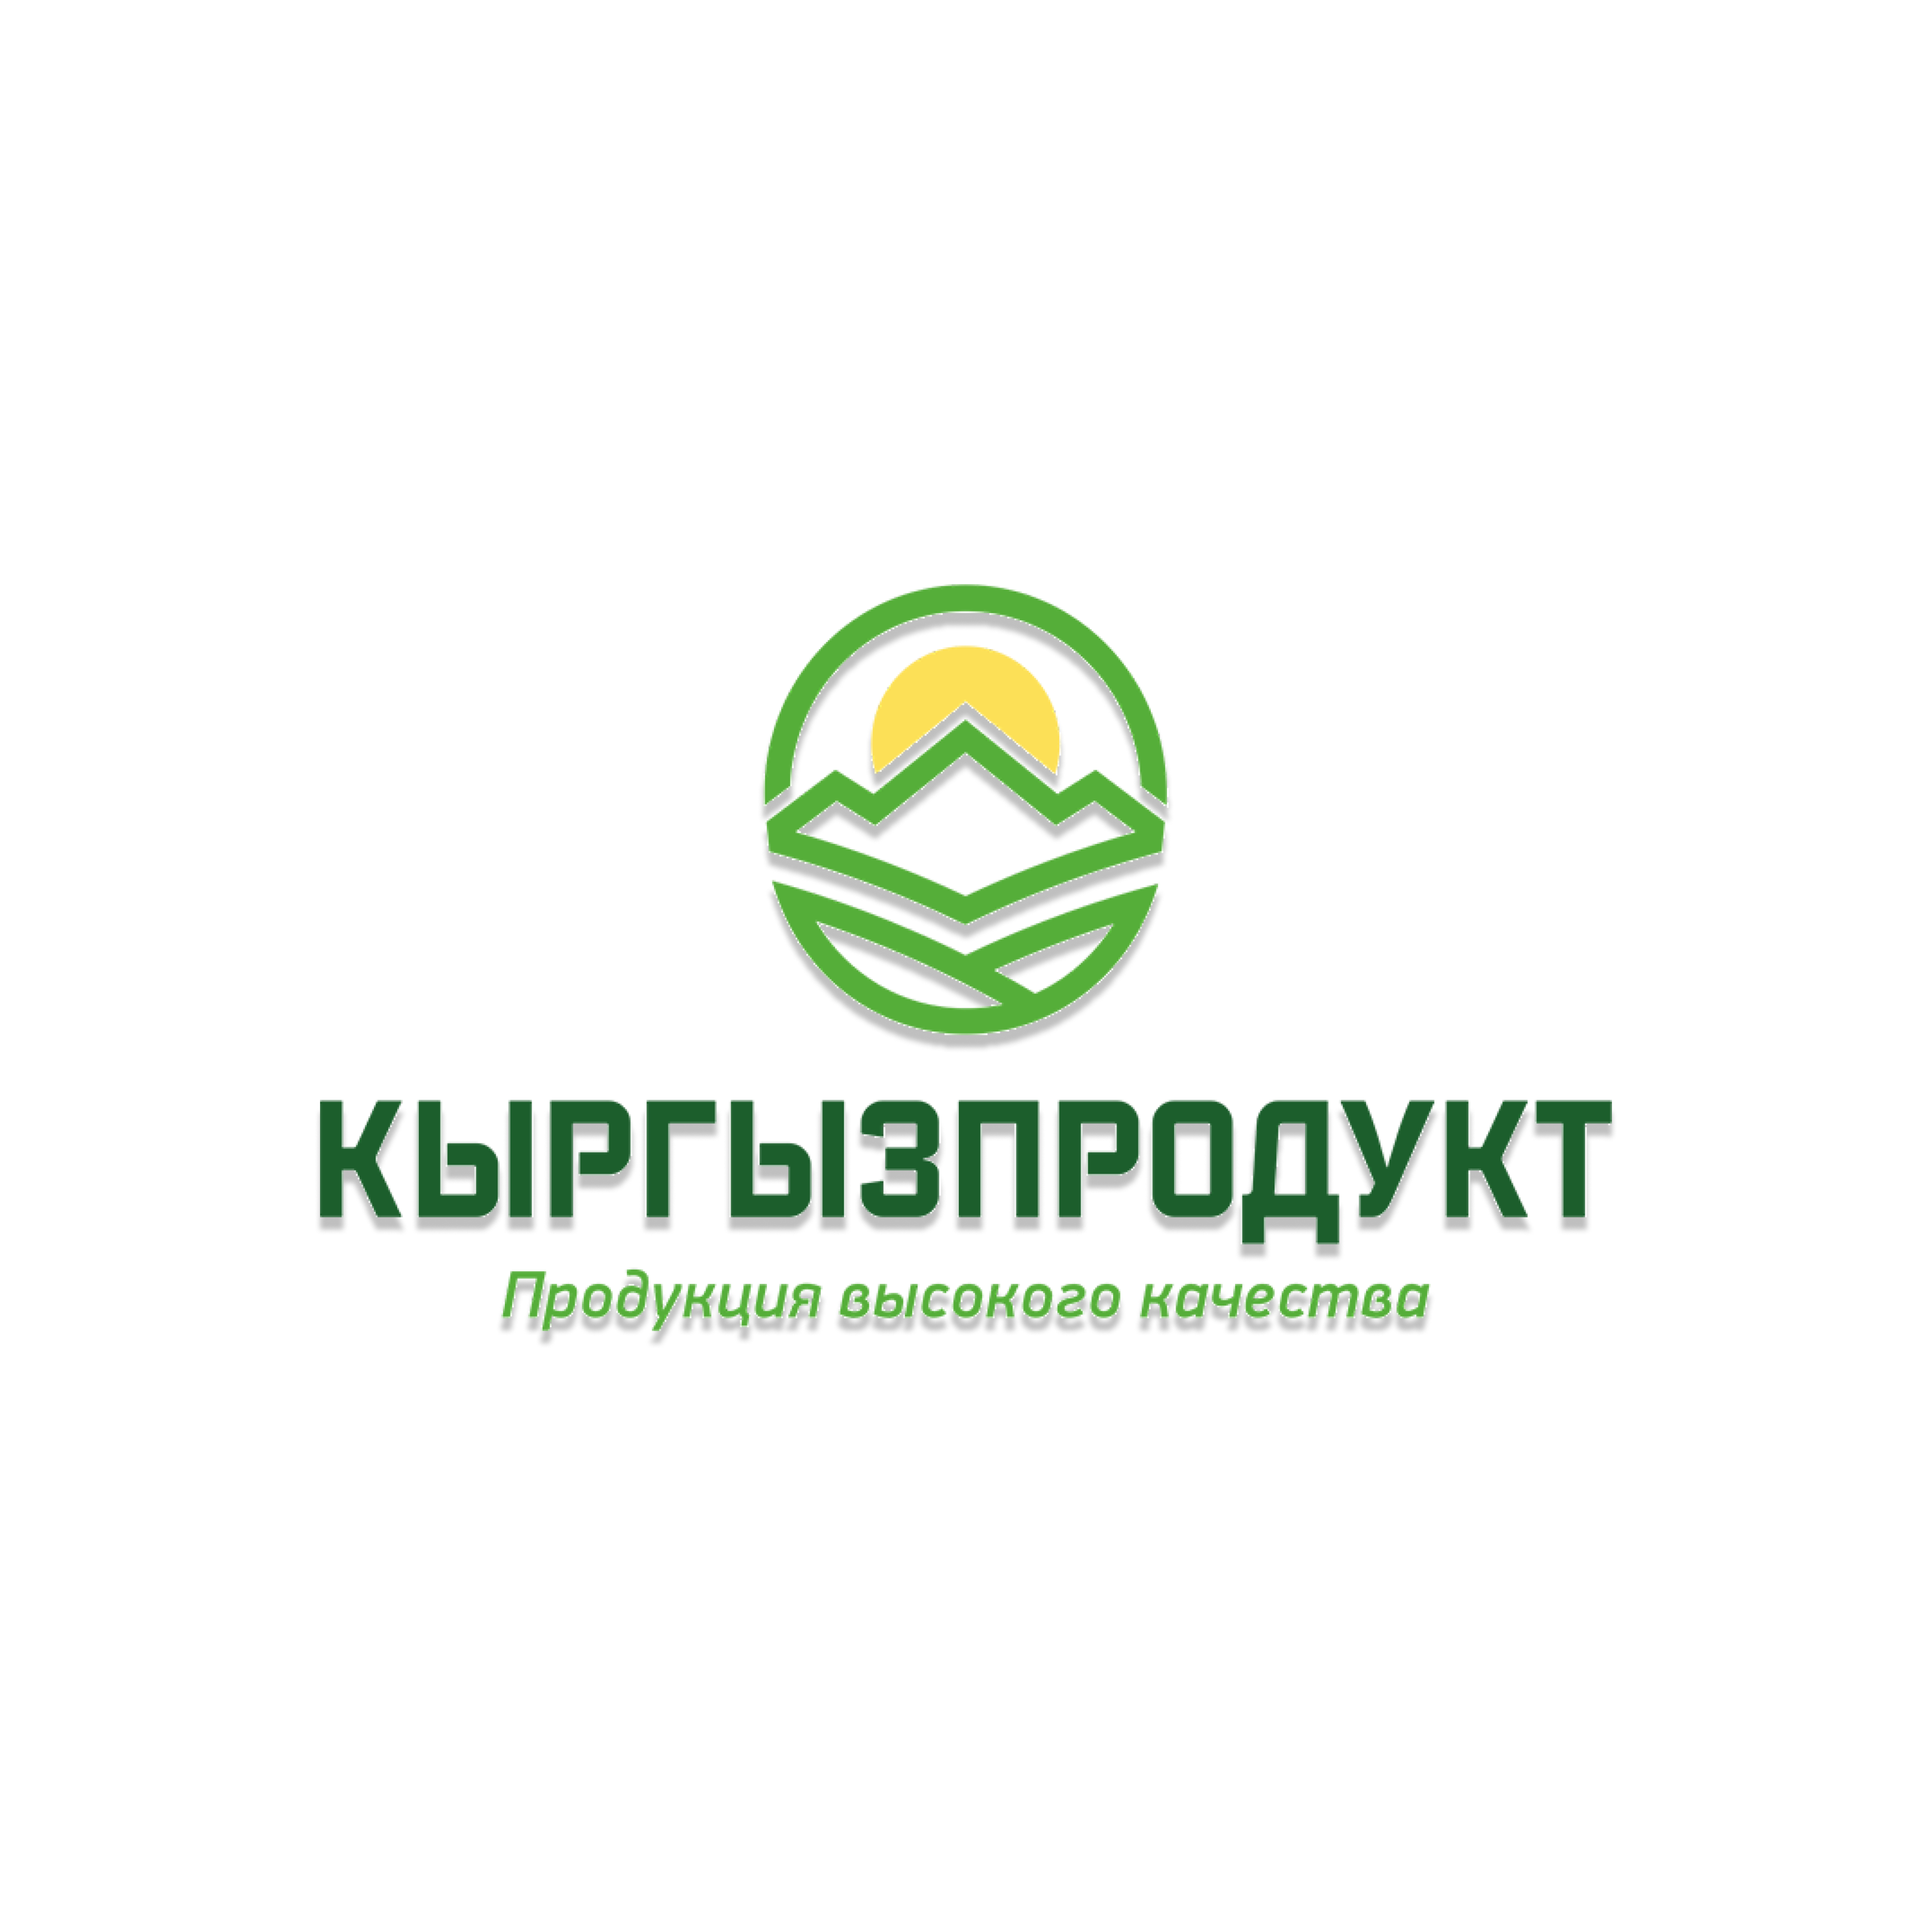 Кыргызцентрпродукт